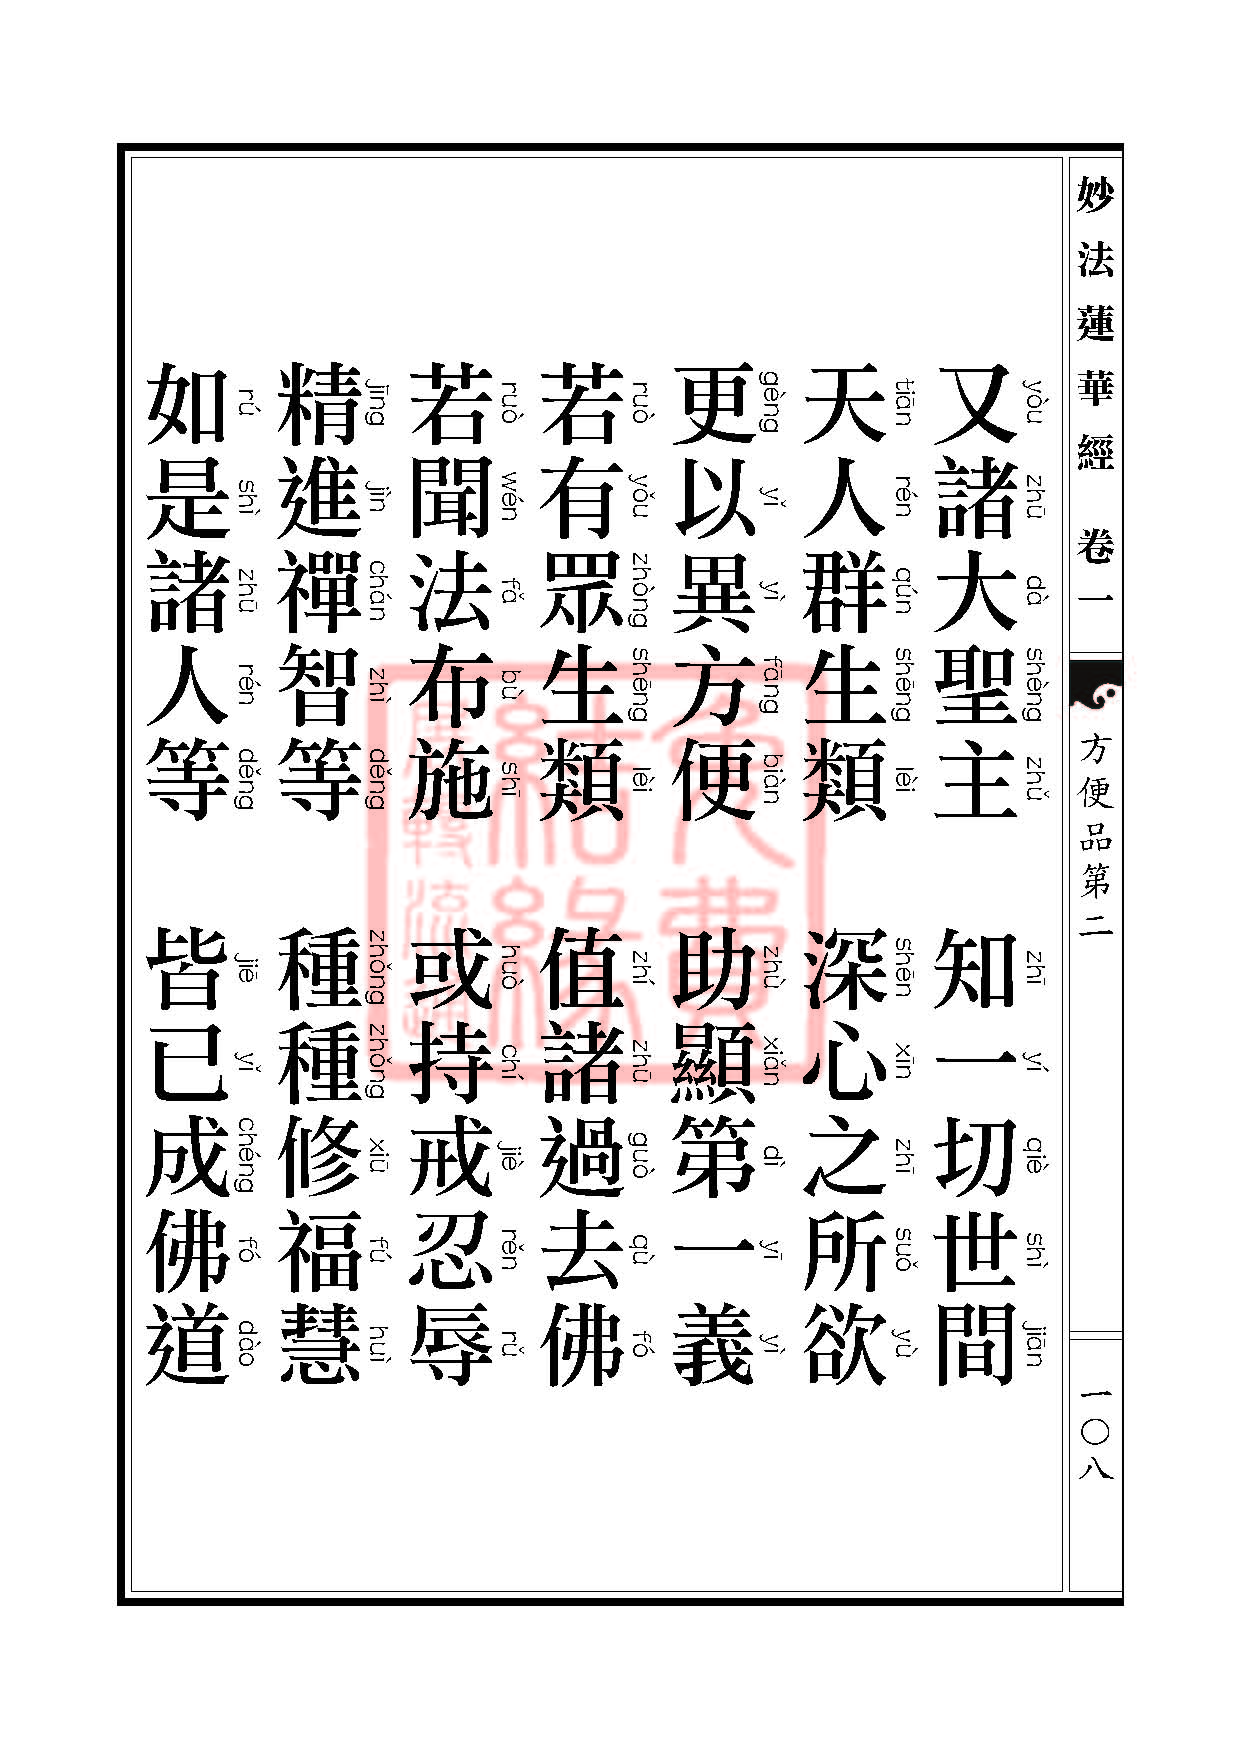 Book_FHJ_HK-A6-PY_Web_页面_108.jpg